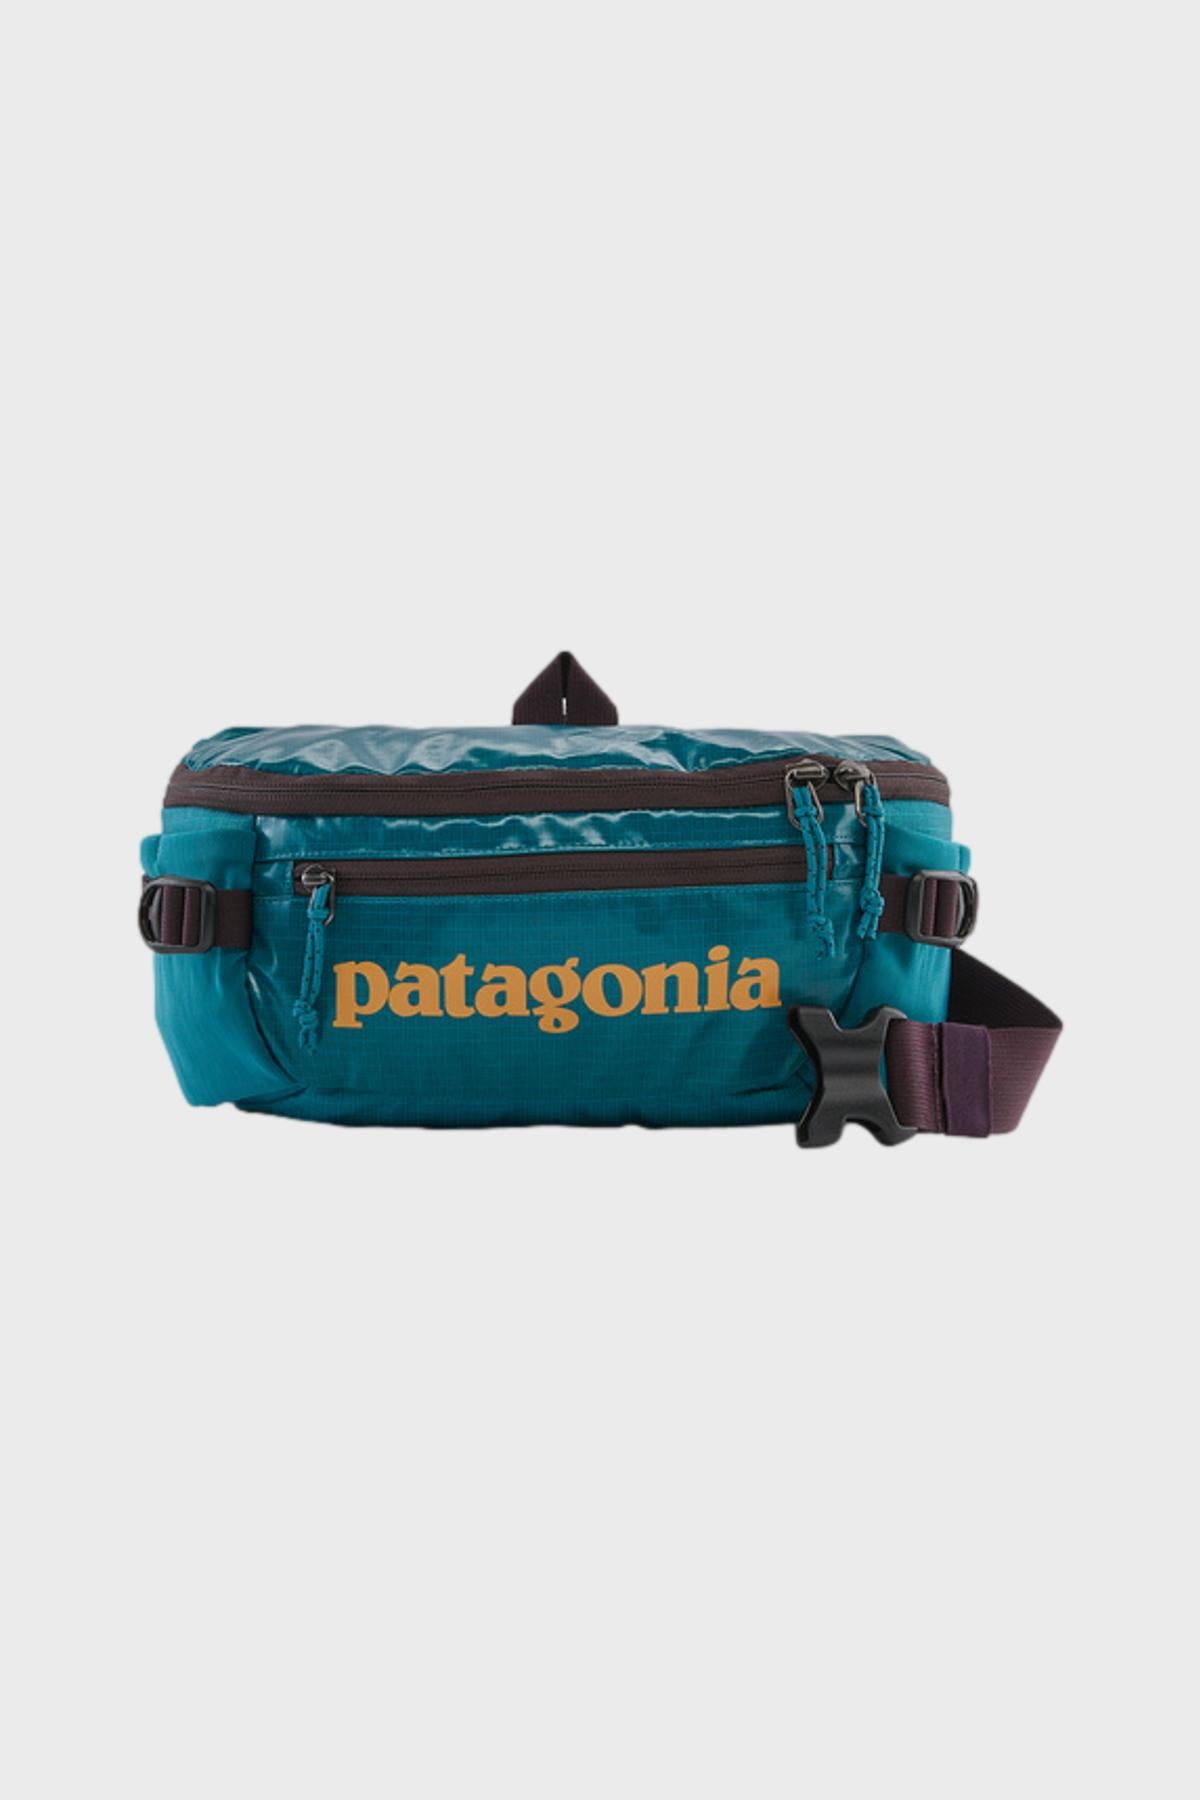 Patagonia - Black Hole Waist Pack 5L